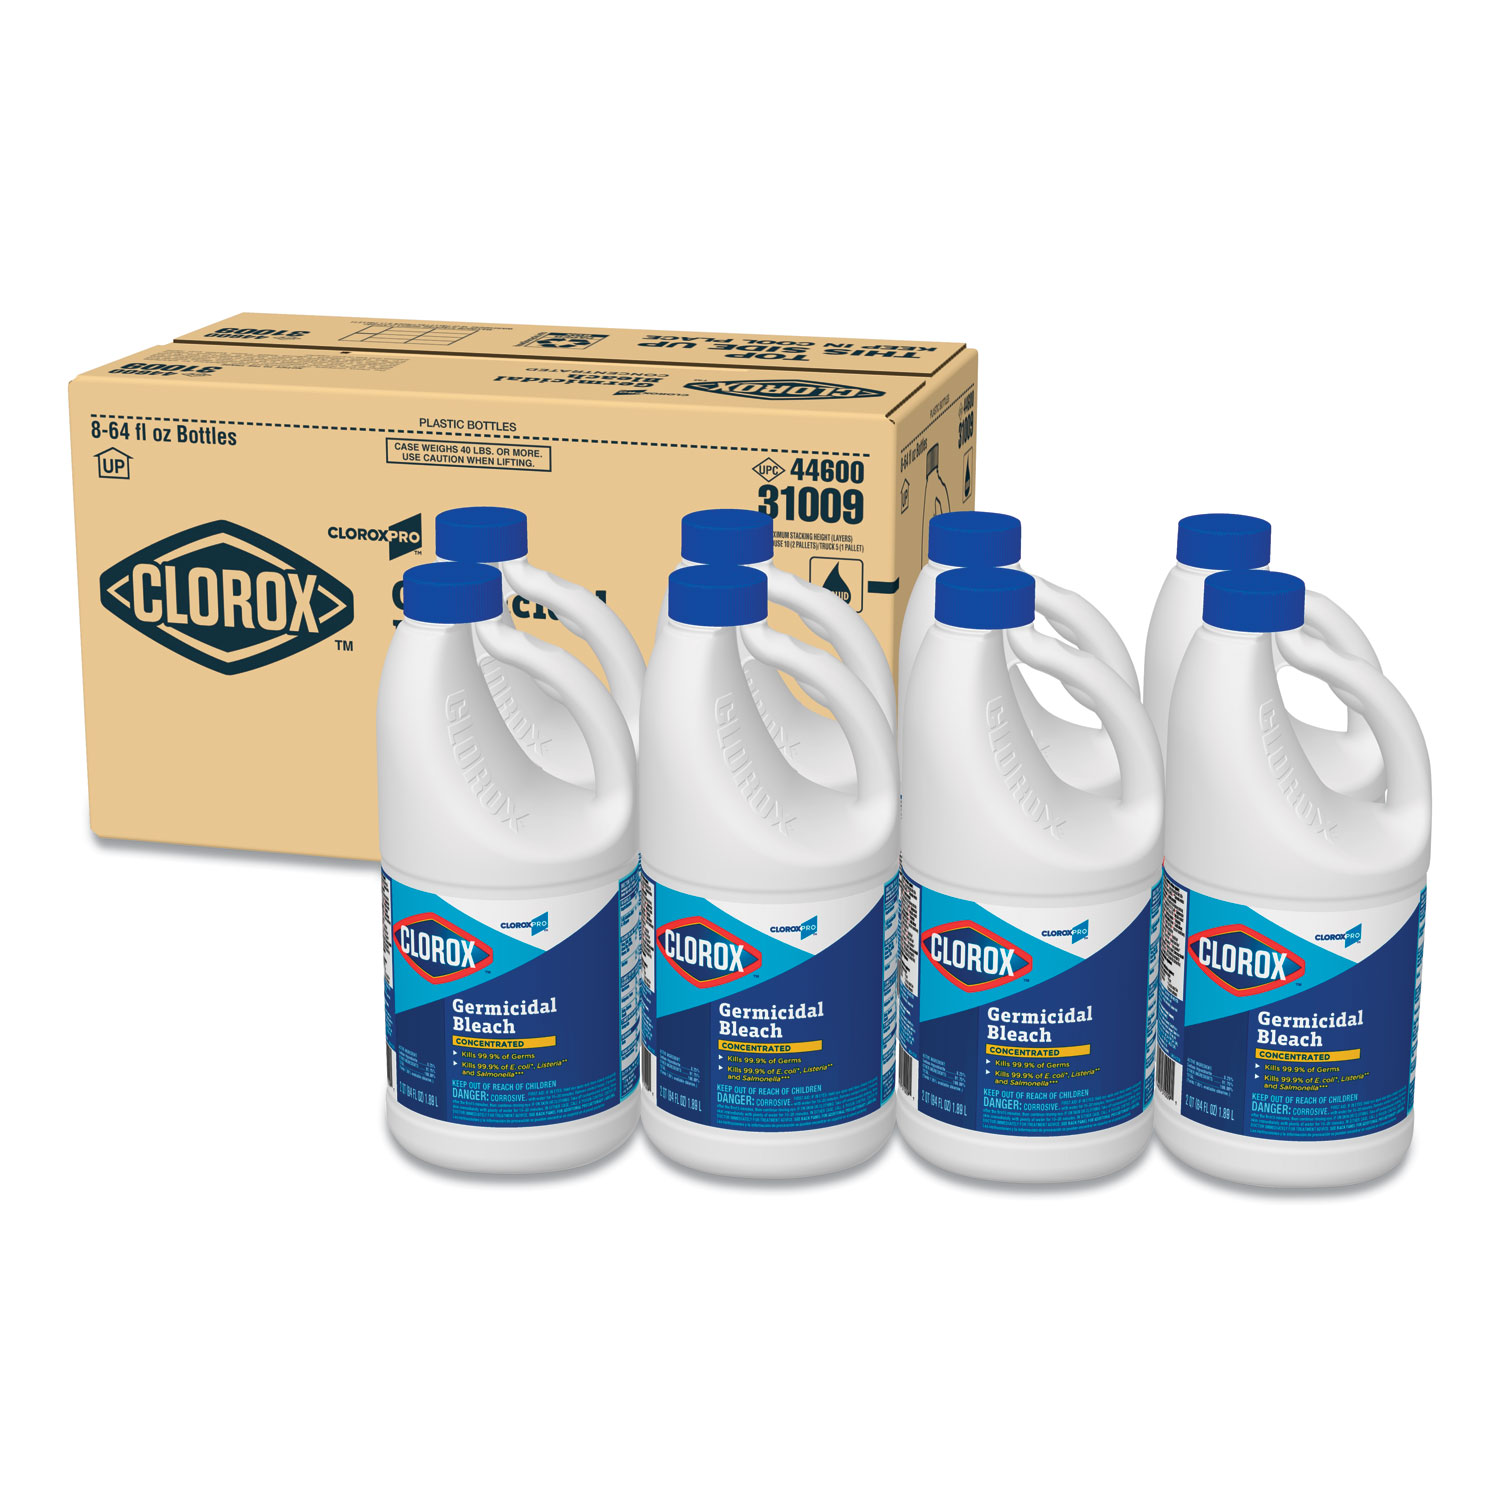  Clorox 10044600310098 Concentrated Germicidal Bleach, Regular, 64oz Bottle, 8/Carton (CLO31009CT) 